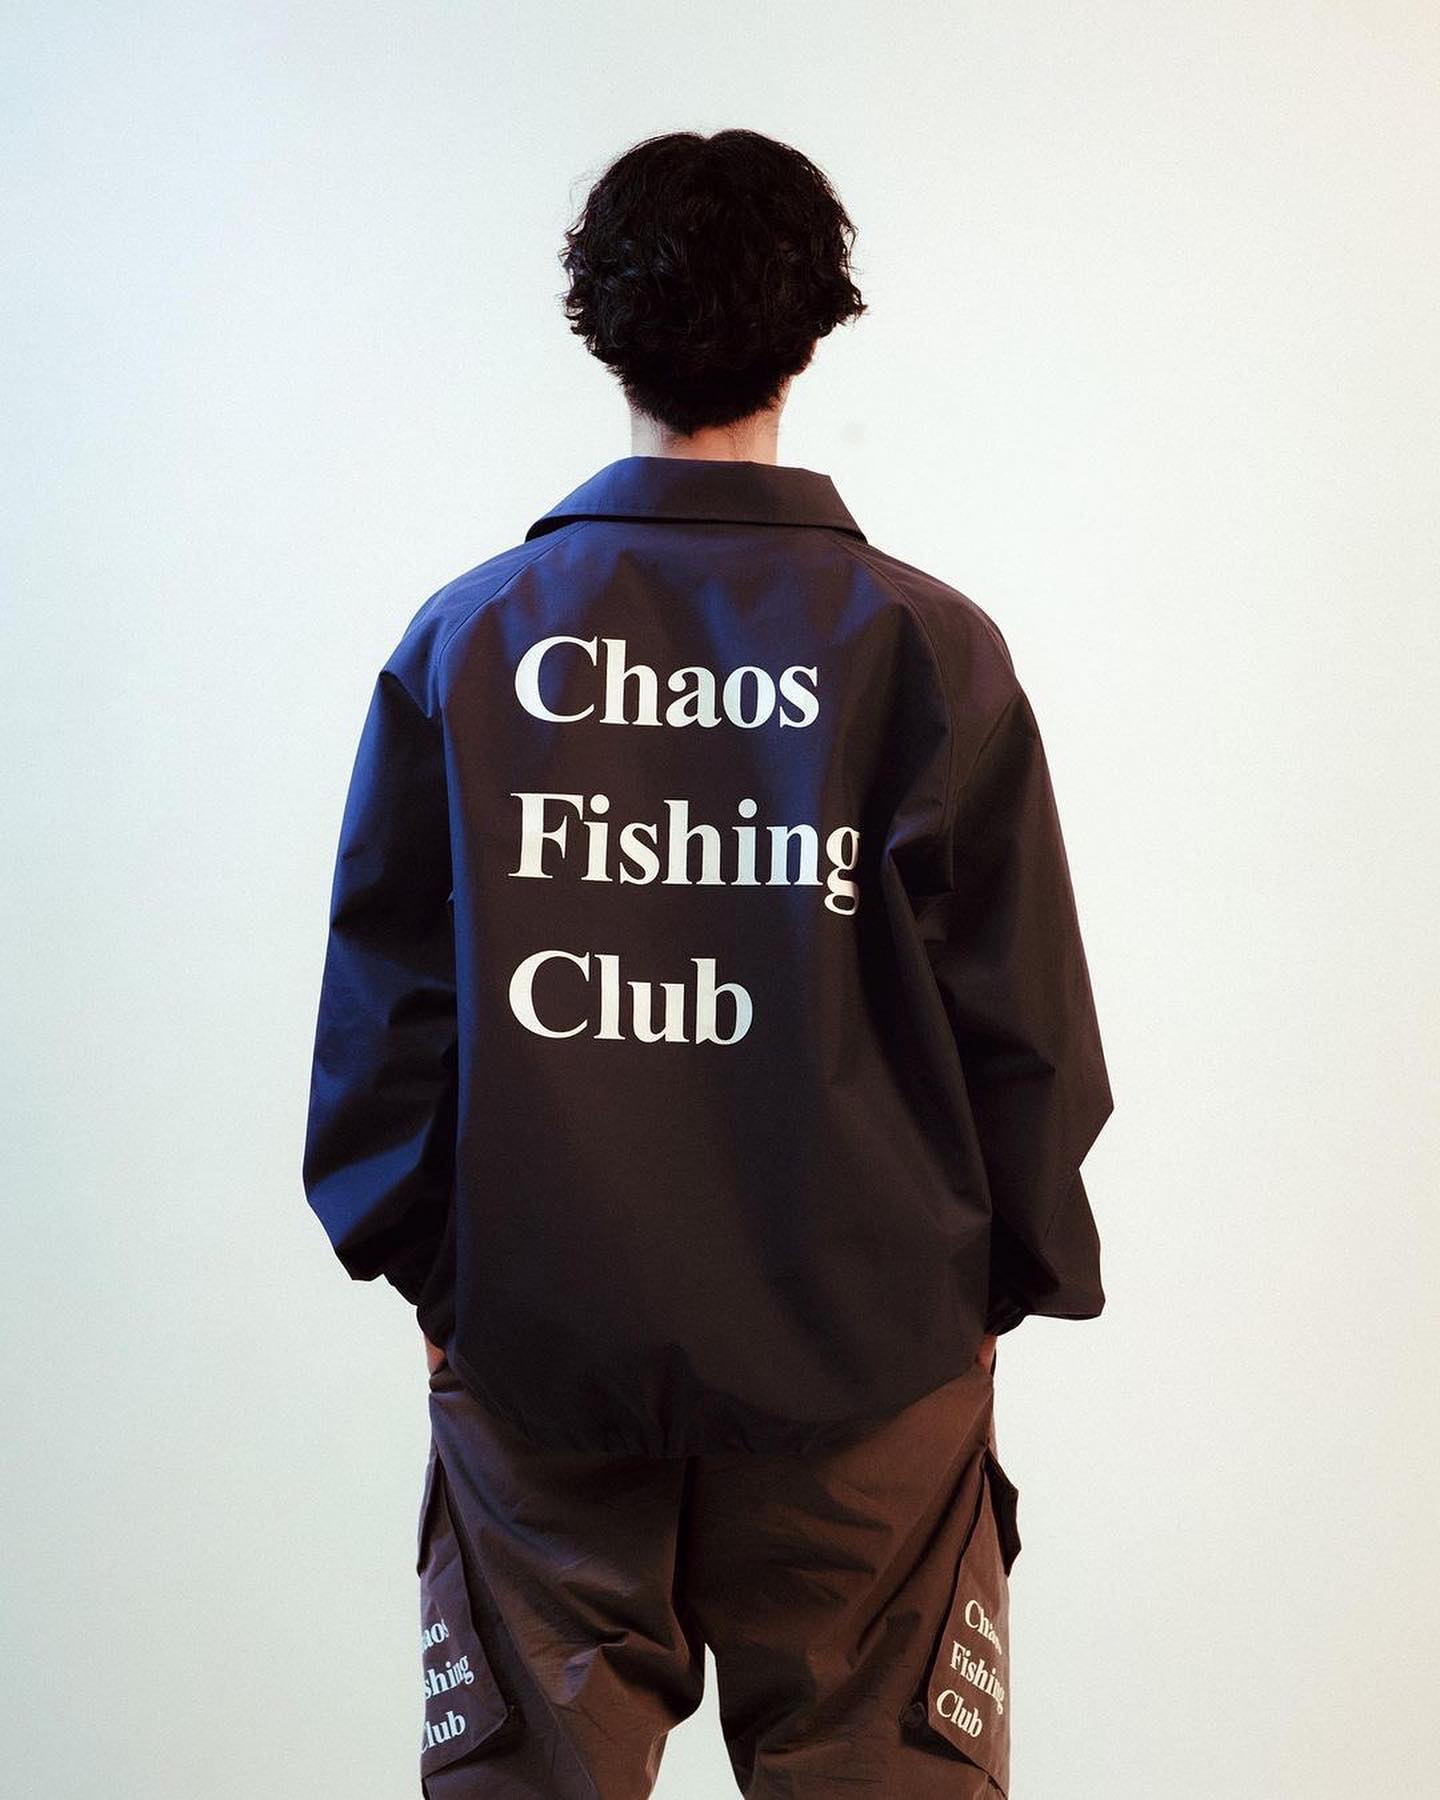 New ArrivalChaos Fishing Club / LOGO 3 LAYER COACH JACKET@instant_shibuya @instant_skateboards & Web Store#chaosfishingclub #instantskateshop #instantshibuya